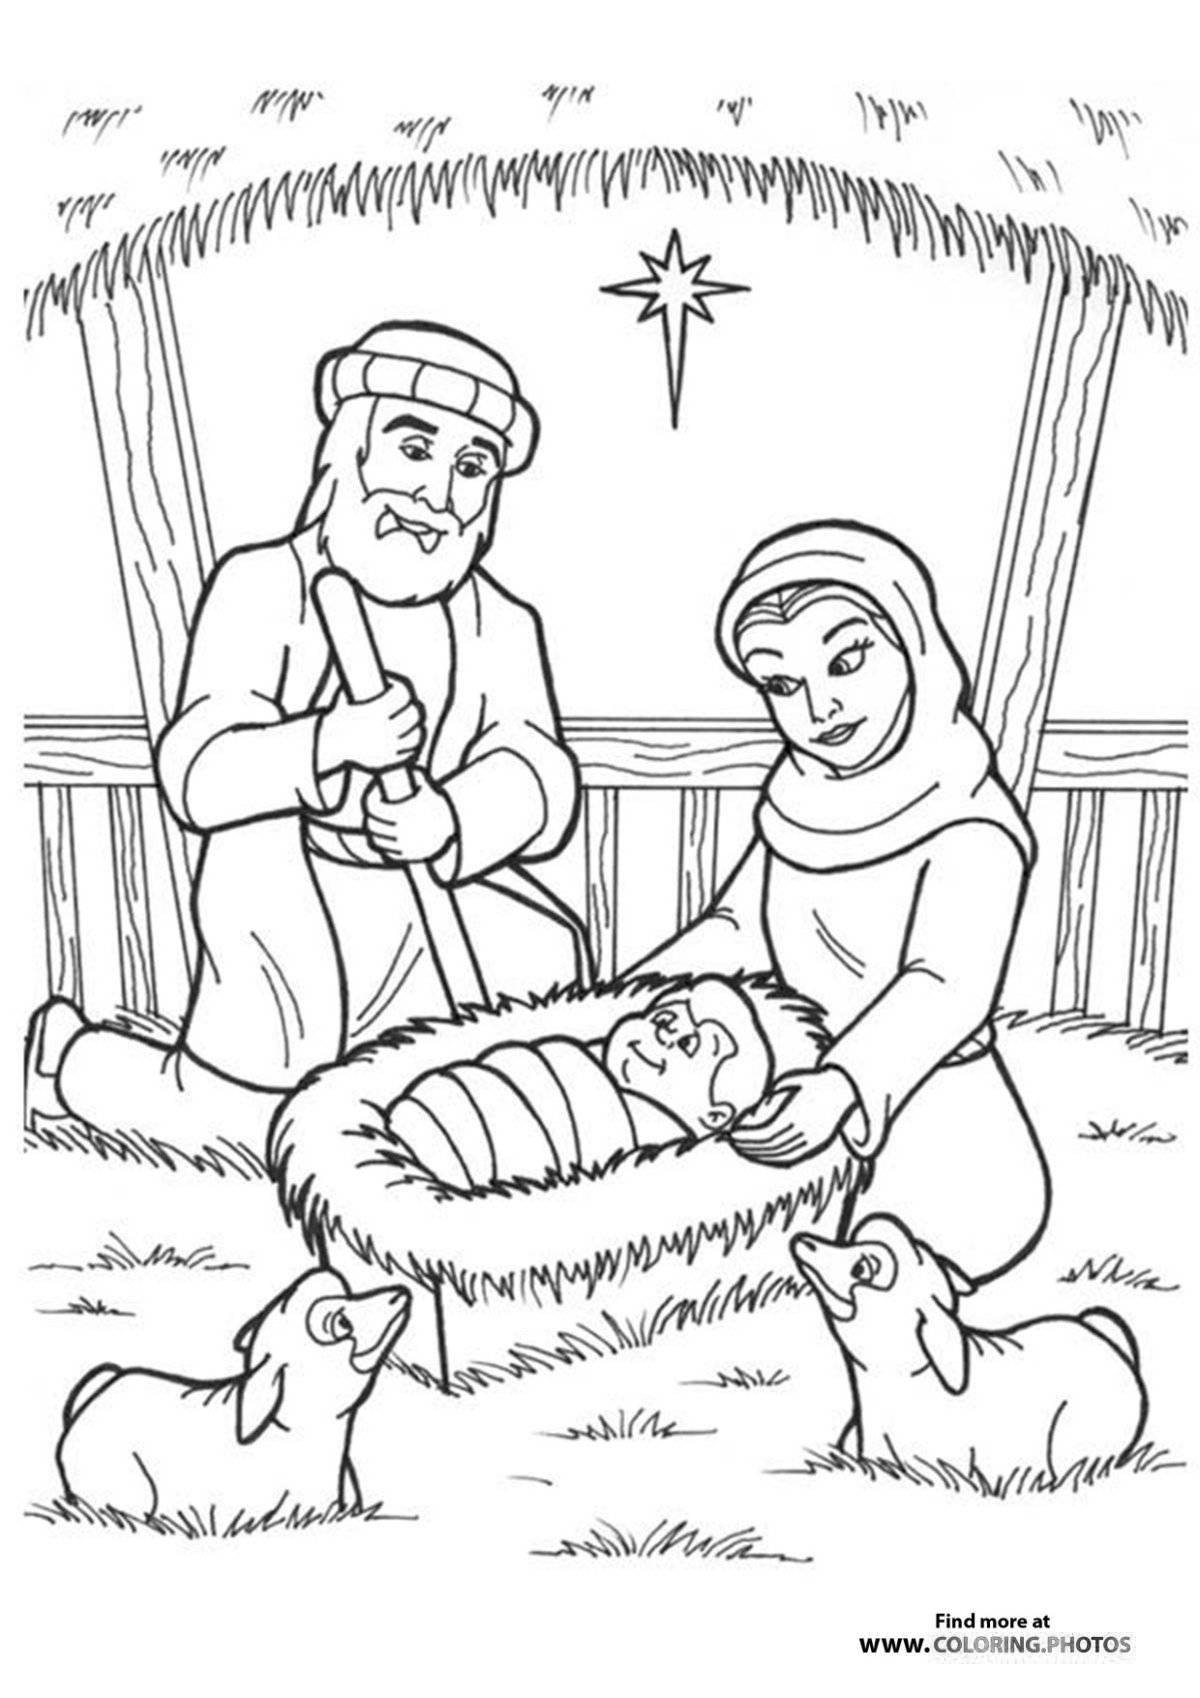 Rampant Christmas story coloring book